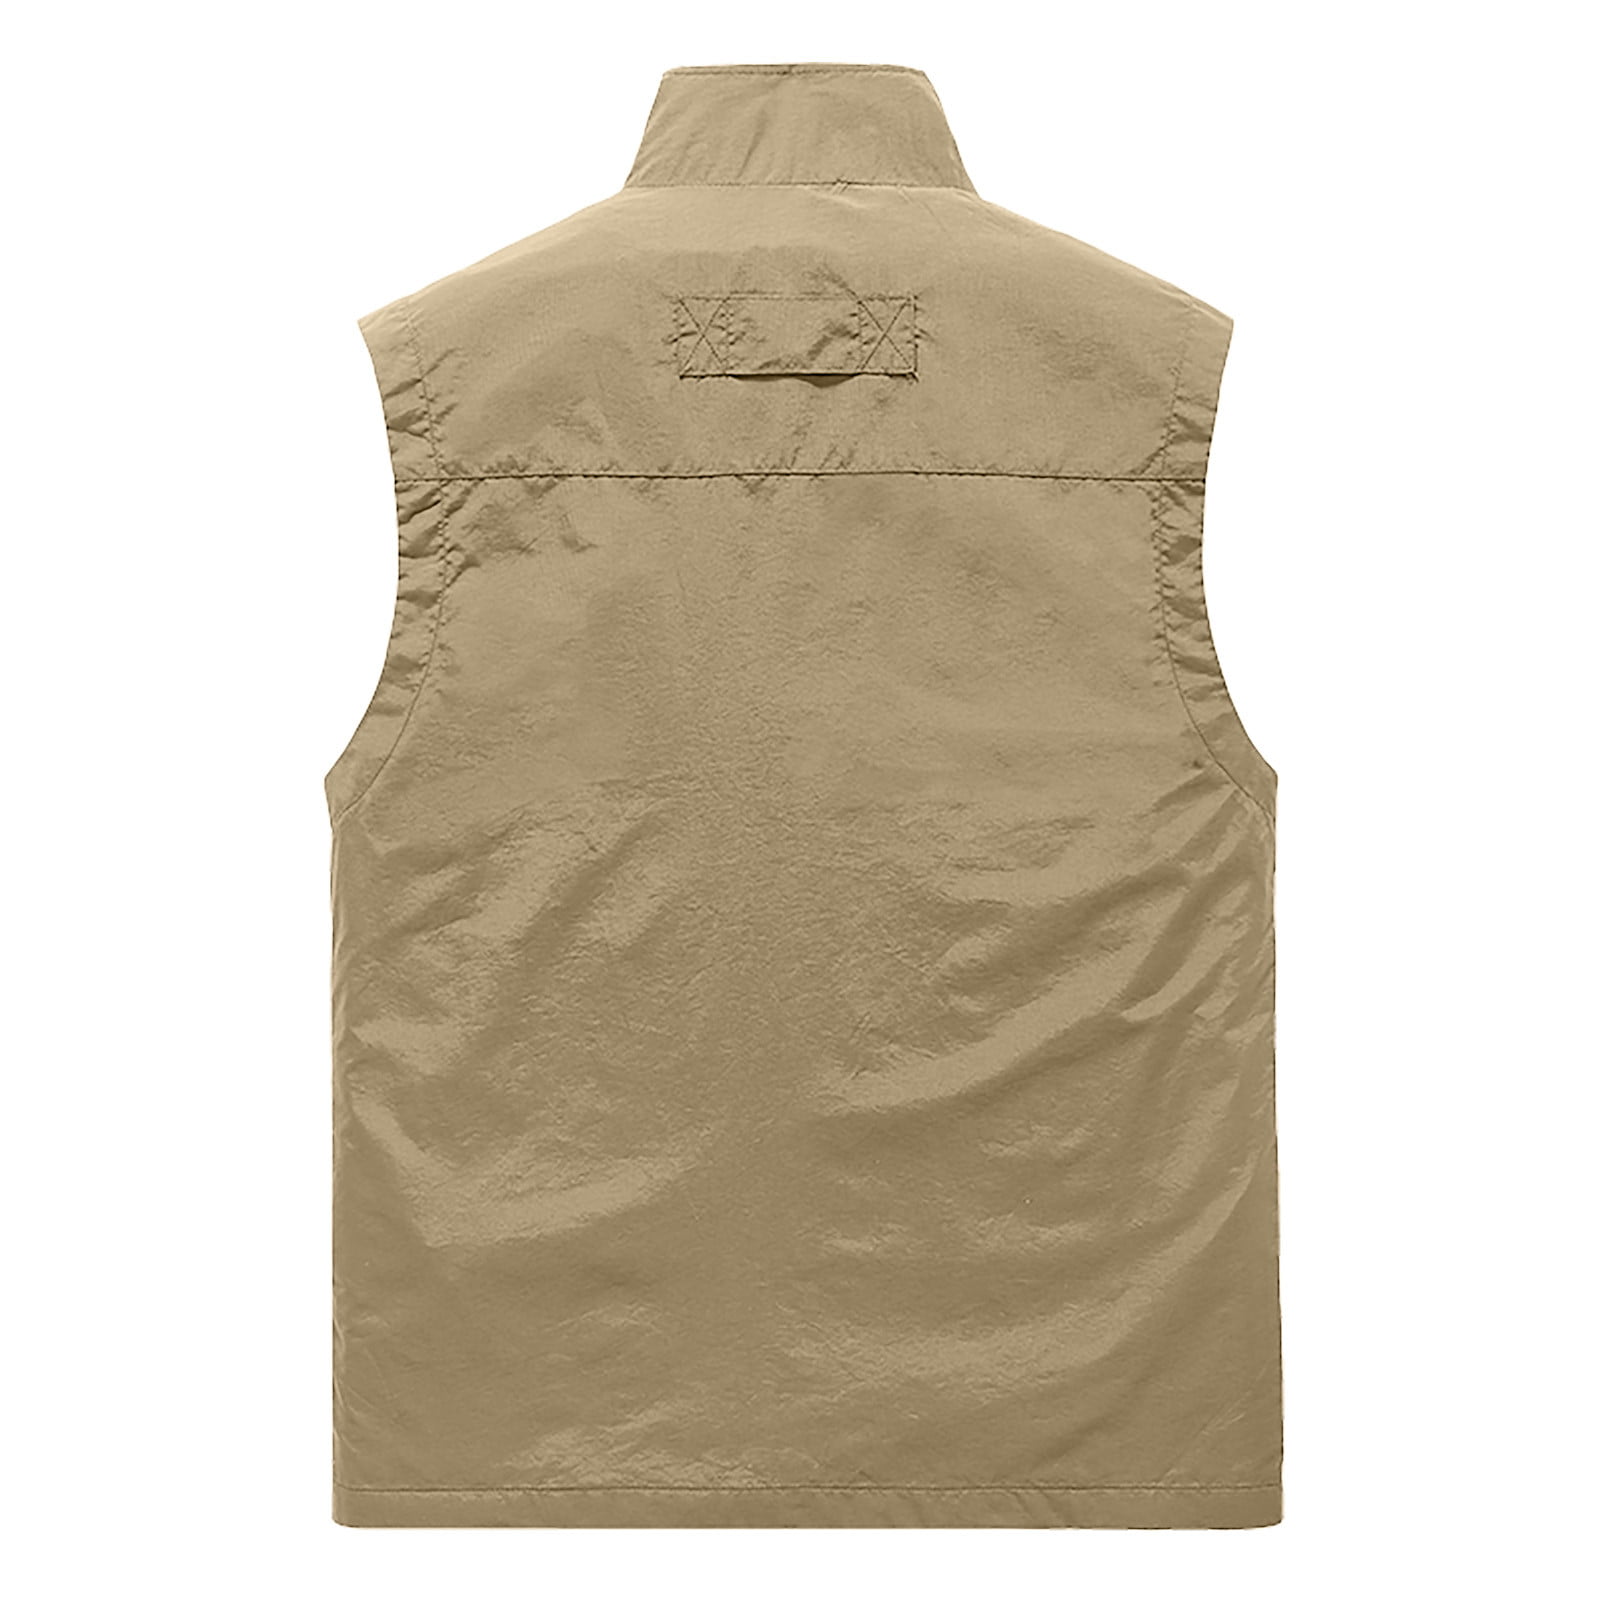 Xysaqa Men's Casual Fishing Travel Utility Vests Men Big & Tall Lightweight Outdoor Work Photo Vests Jacket Multi Pockets M-5xl, Size: Medium, Black